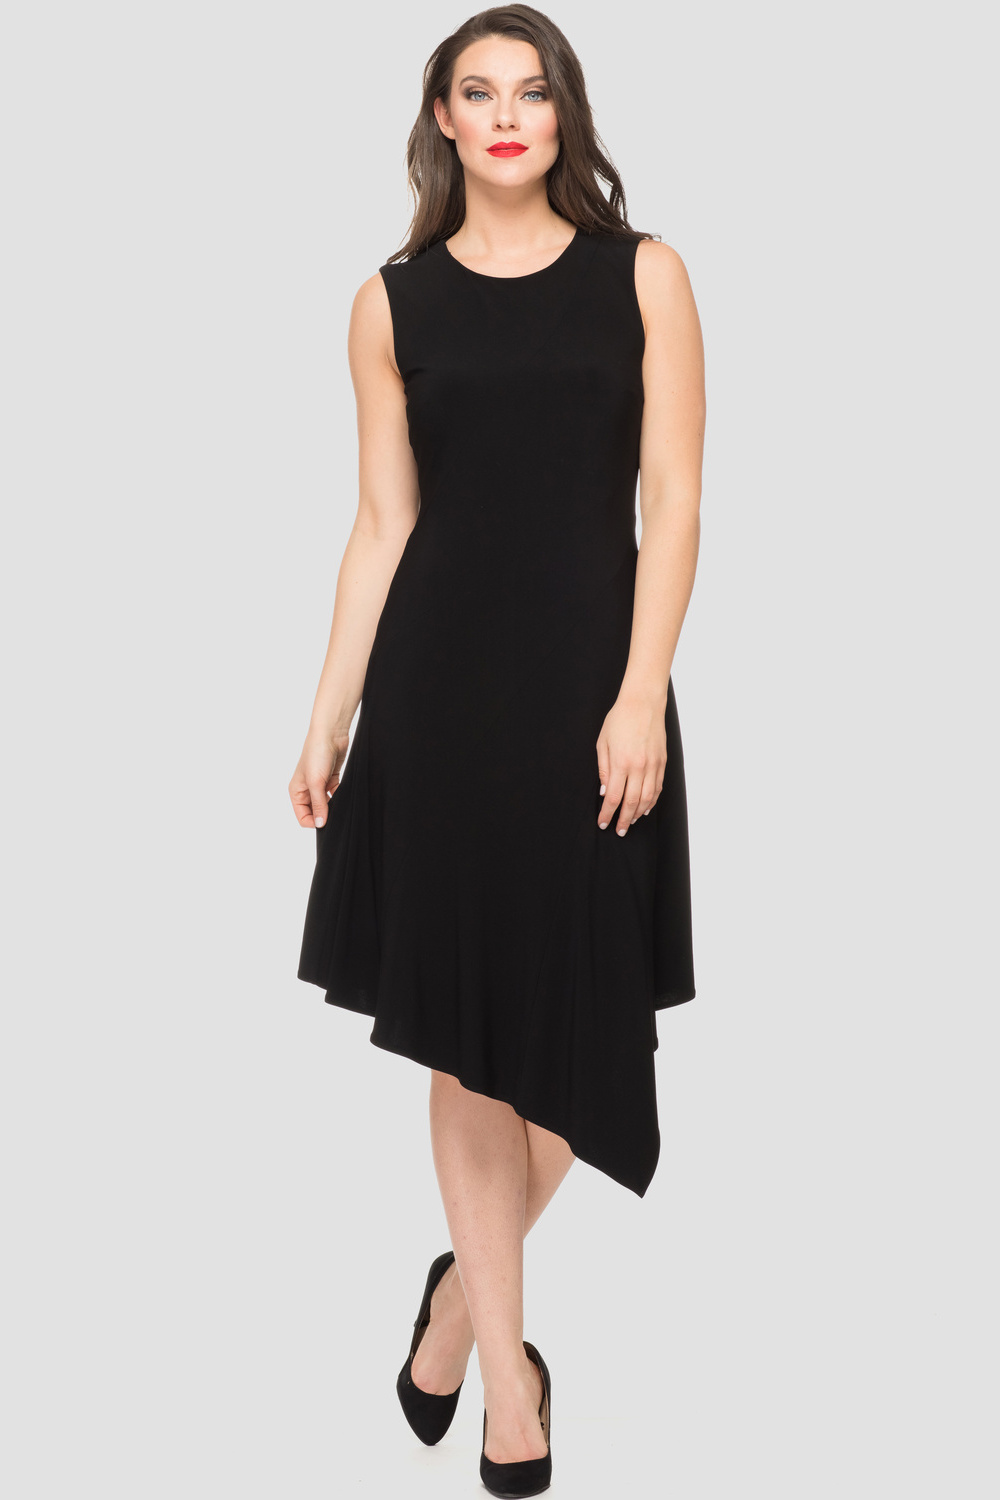 Joseph Ribkoff Dress Style 191043. Black